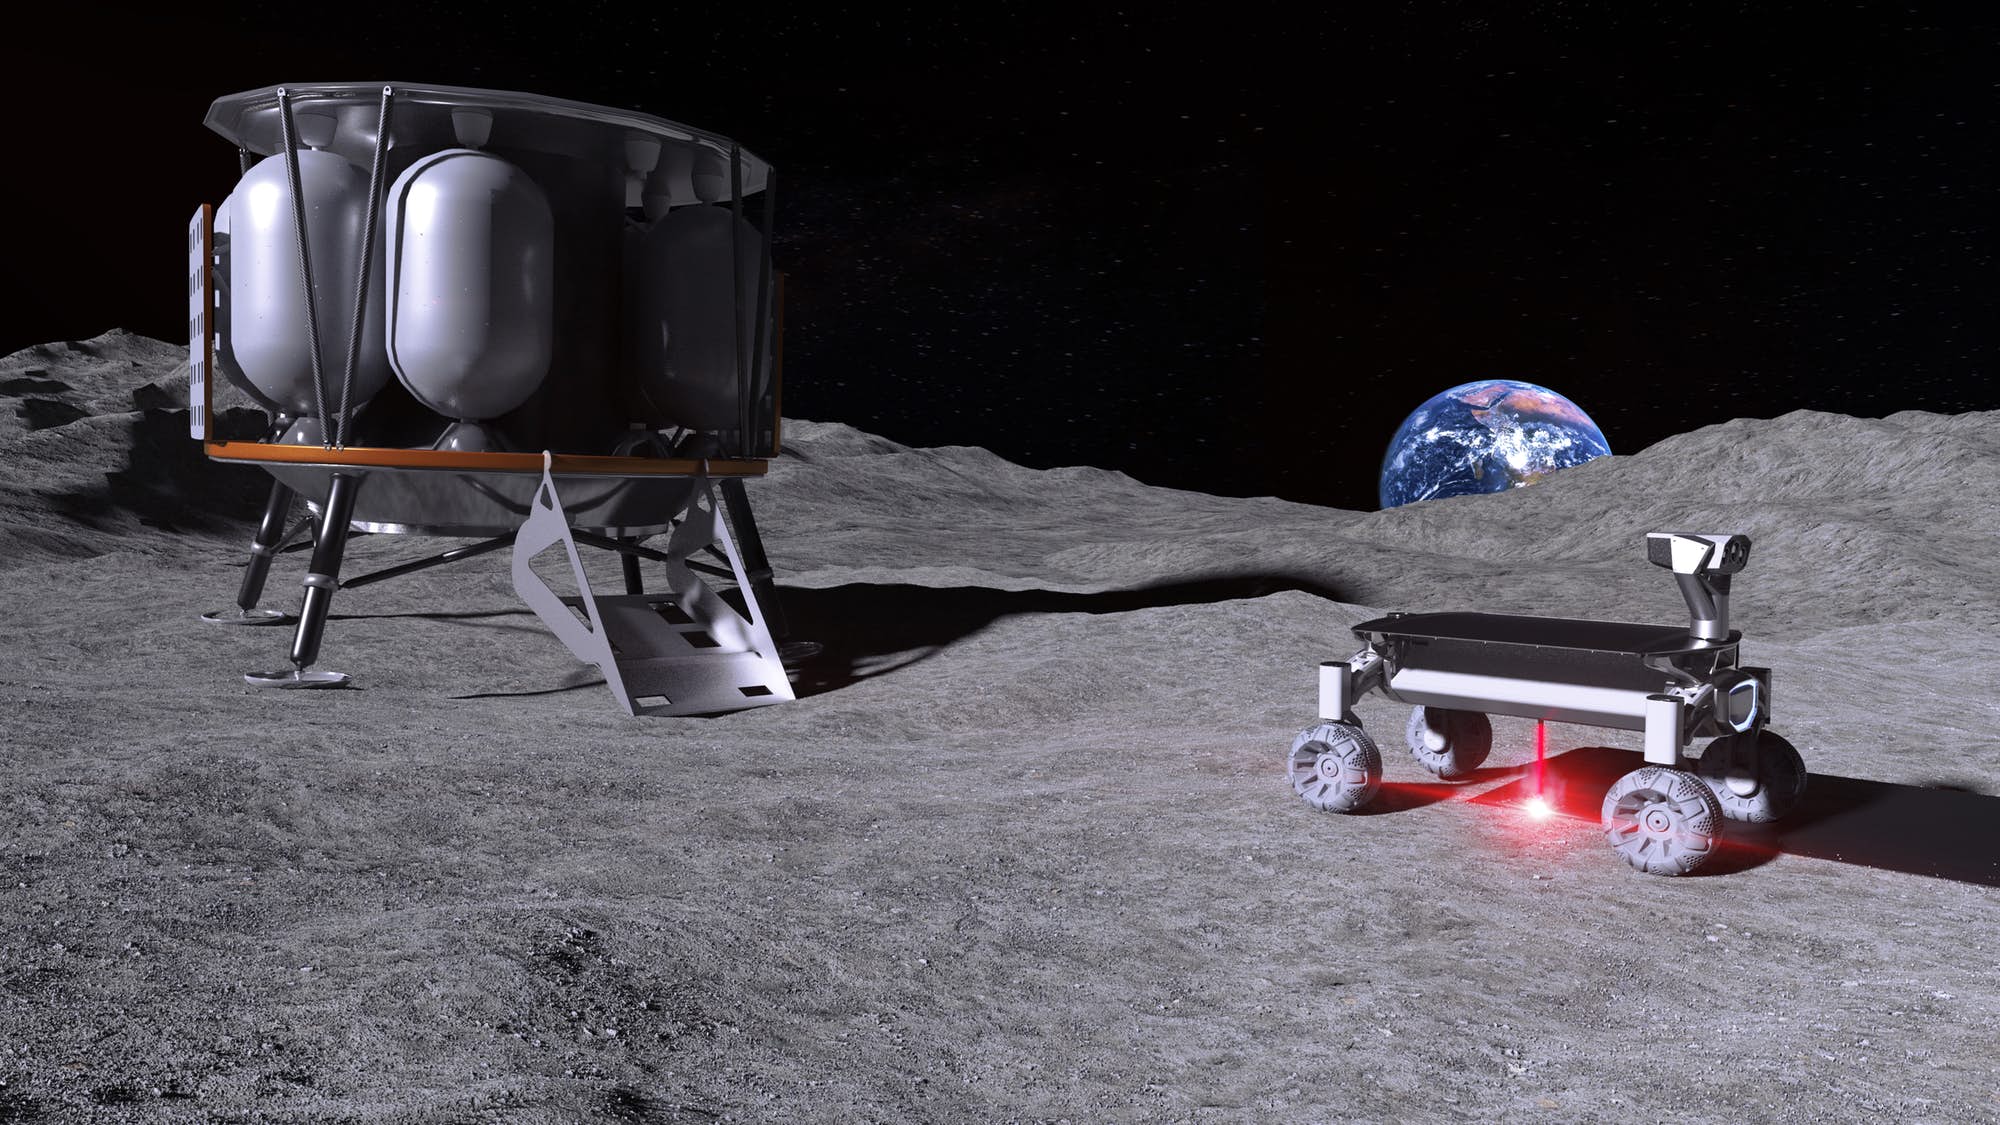 A 3D rendering of the Moonrise laser 3D printer. Image via LZH.